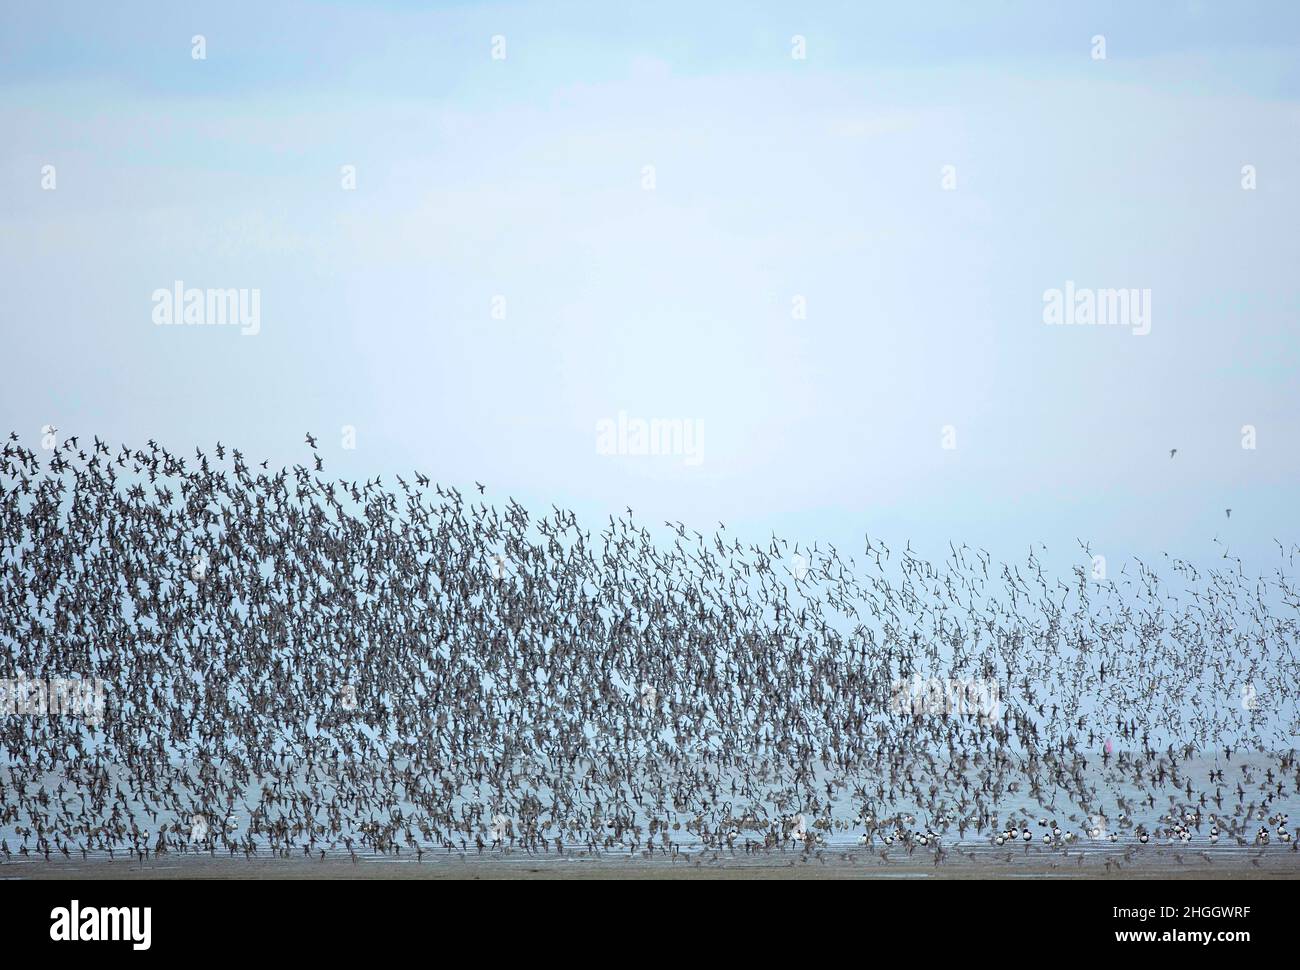 dunlin (Calidris alpina), Large flying flock at the coast, Netherlands, Frisia Stock Photo